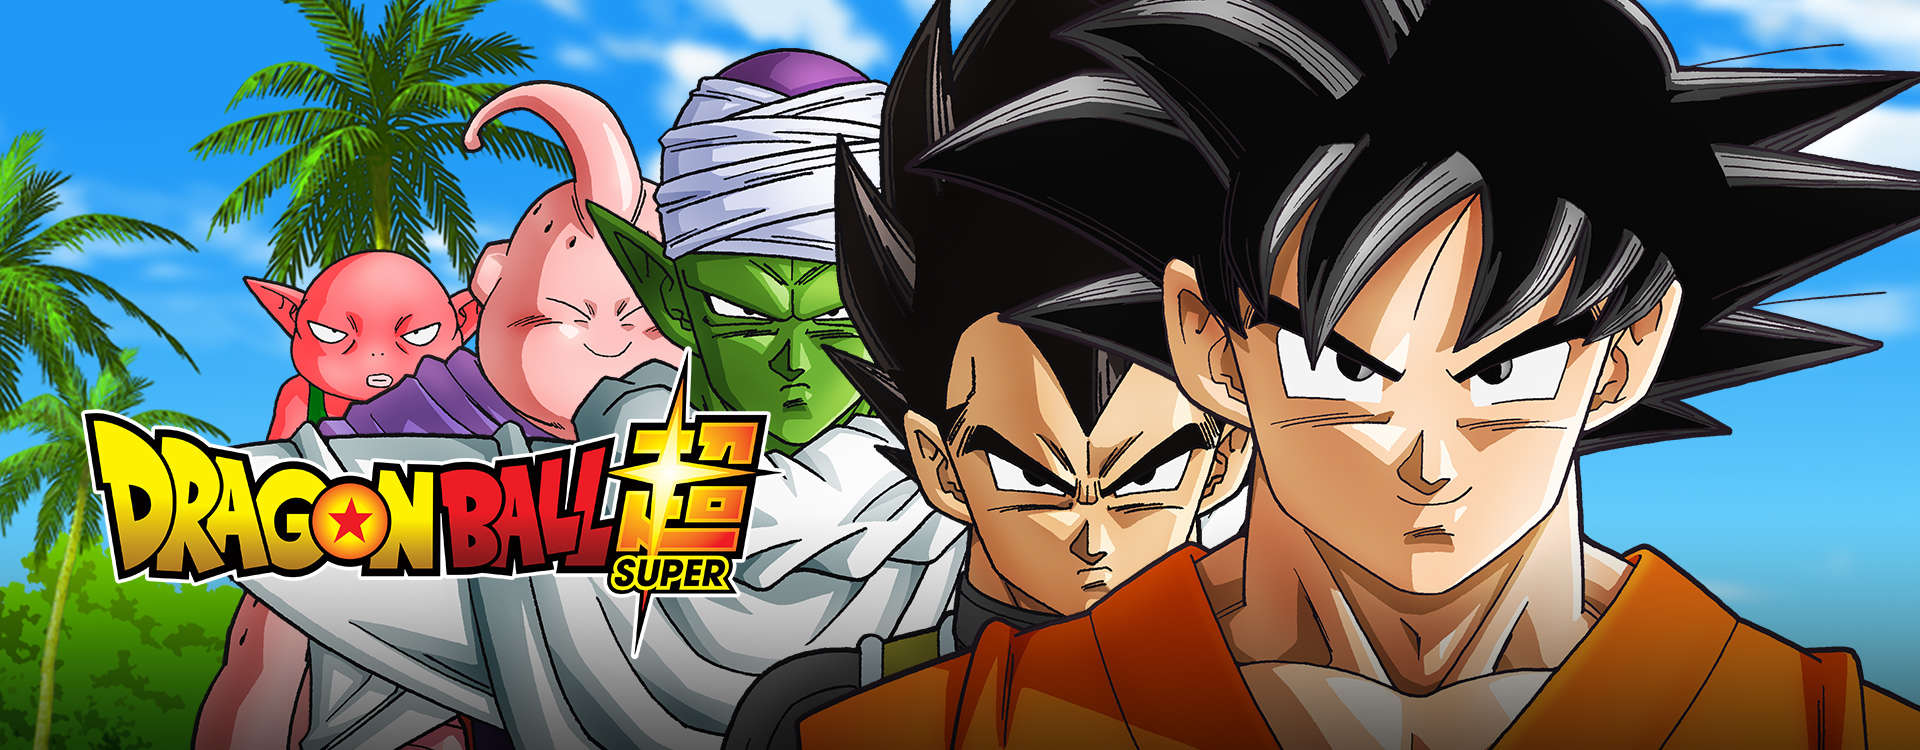 Stream & Watch Dragon Ball Super Episodes Online - Sub & Dub